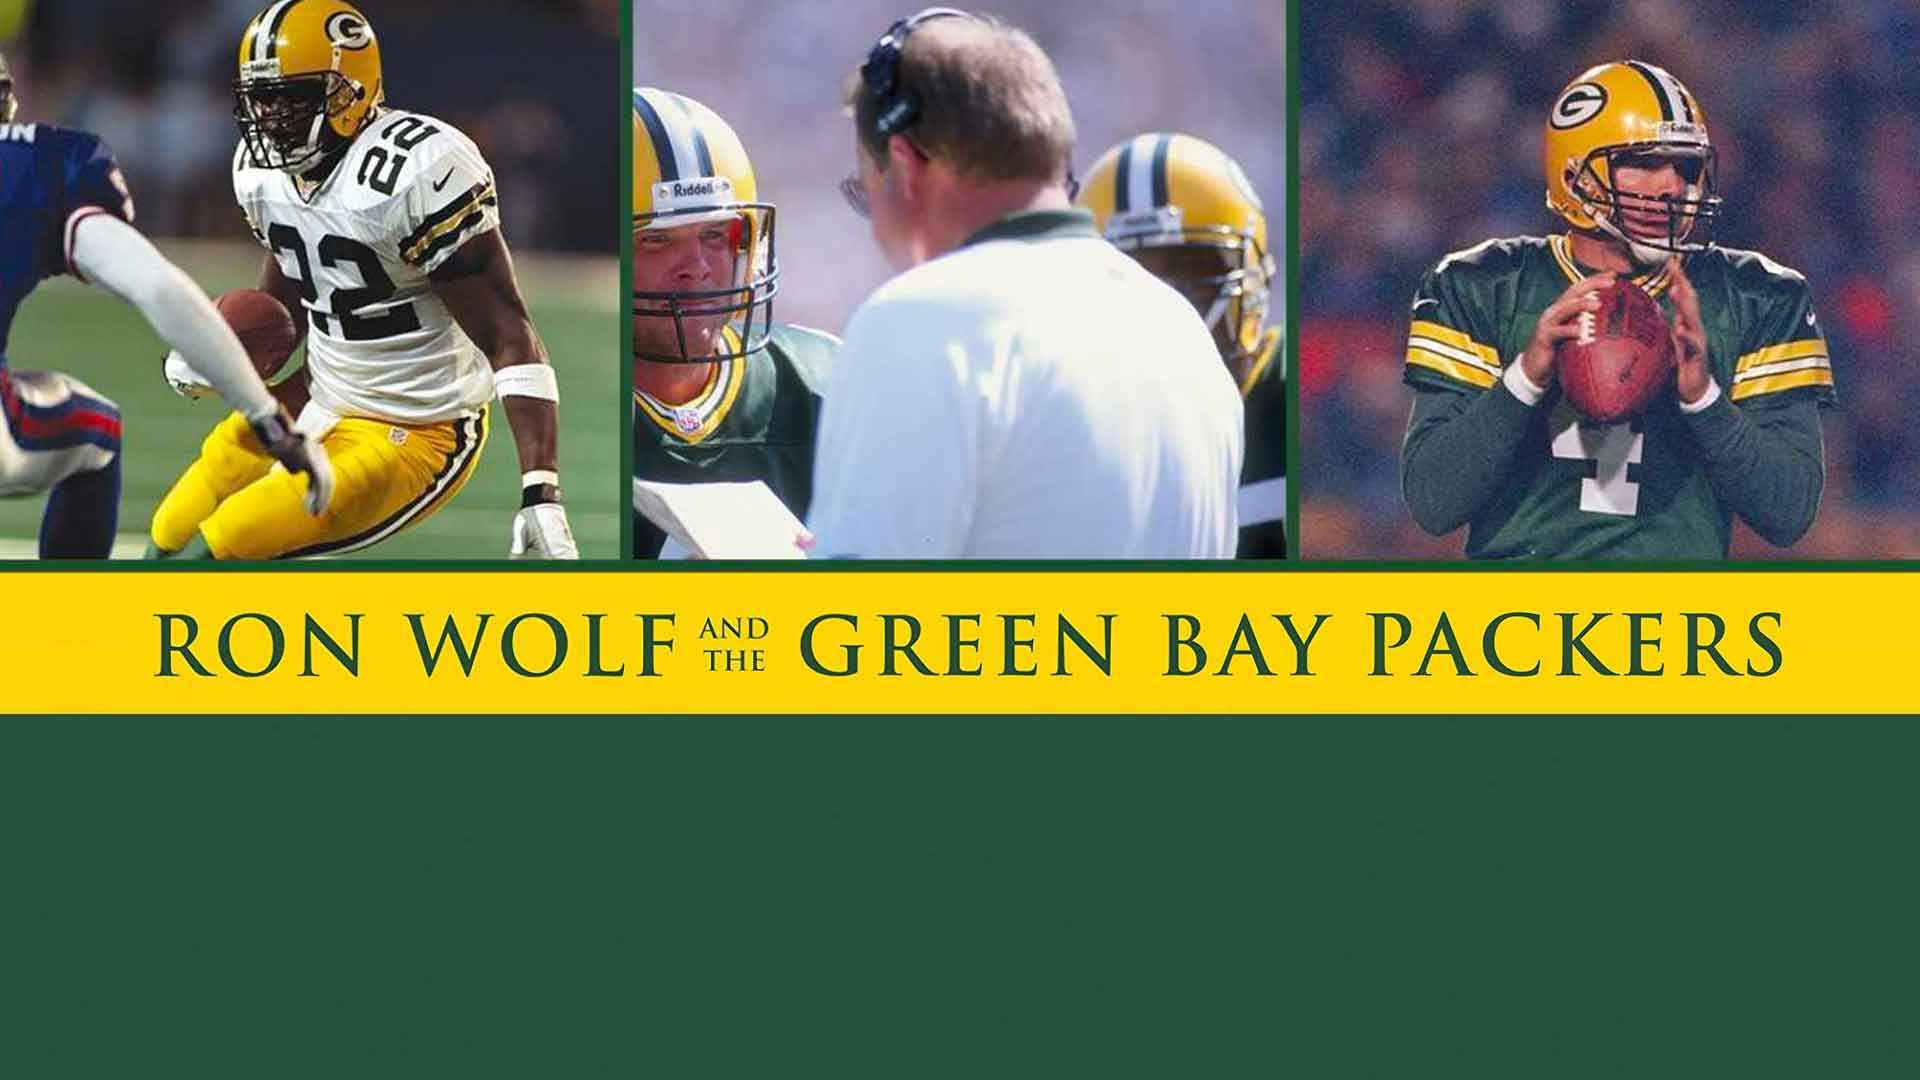 Pack Chat: Ron Wolf & Michael Bauman